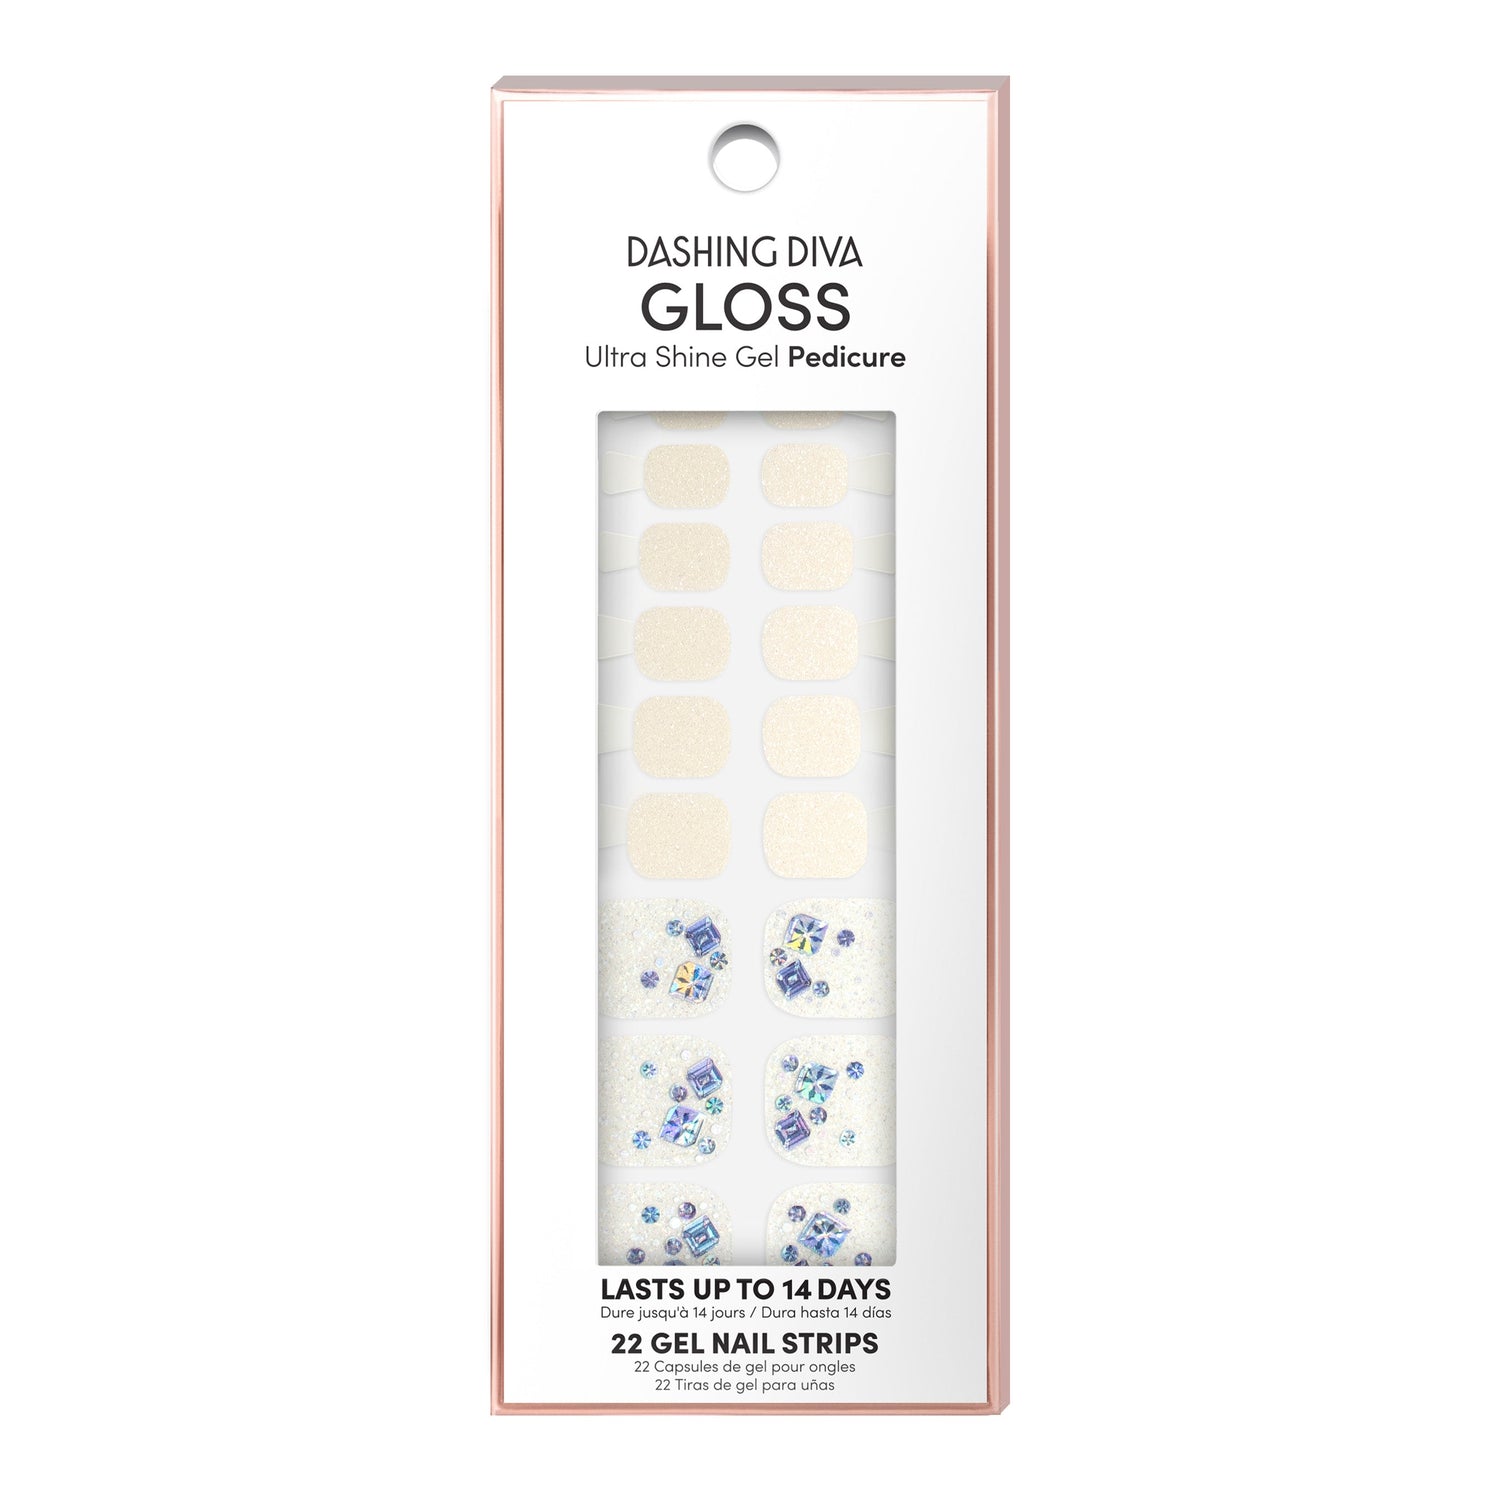 Dashing Diva GLOSS Pedicure neutral glitter gel pedi strips with blue jewel accents.